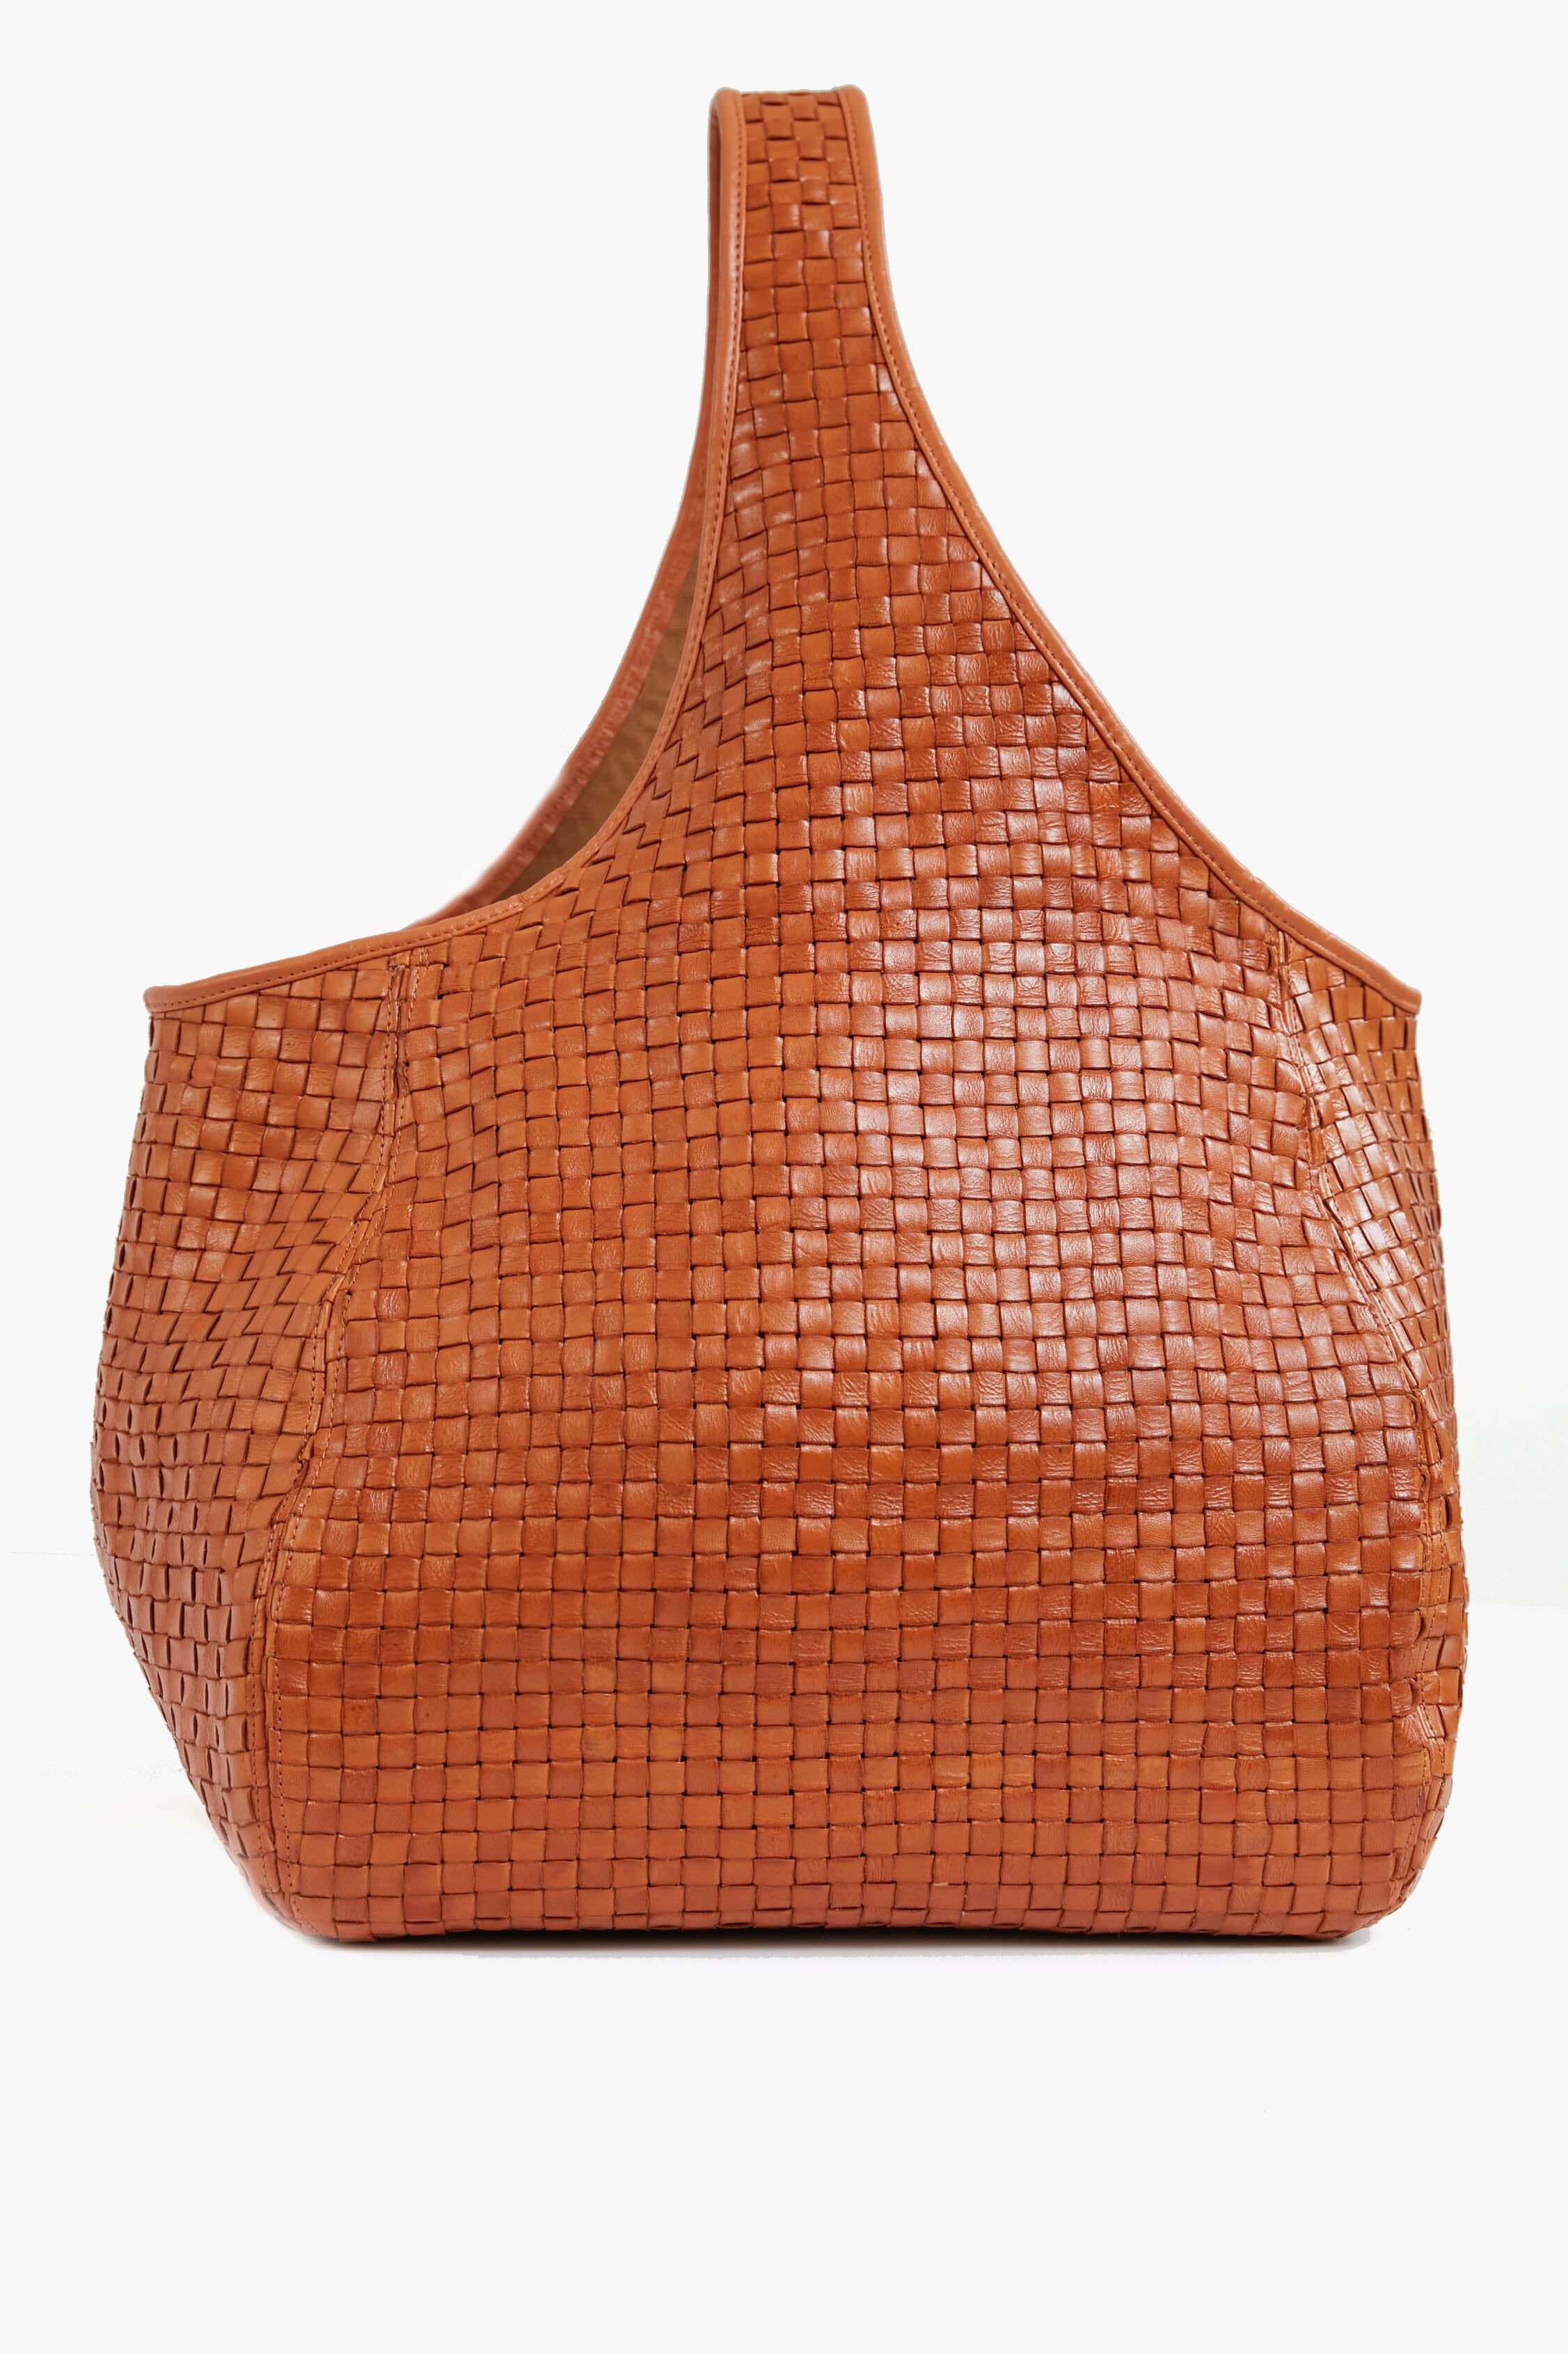 Natural Bando Bag by Clare V. for $20